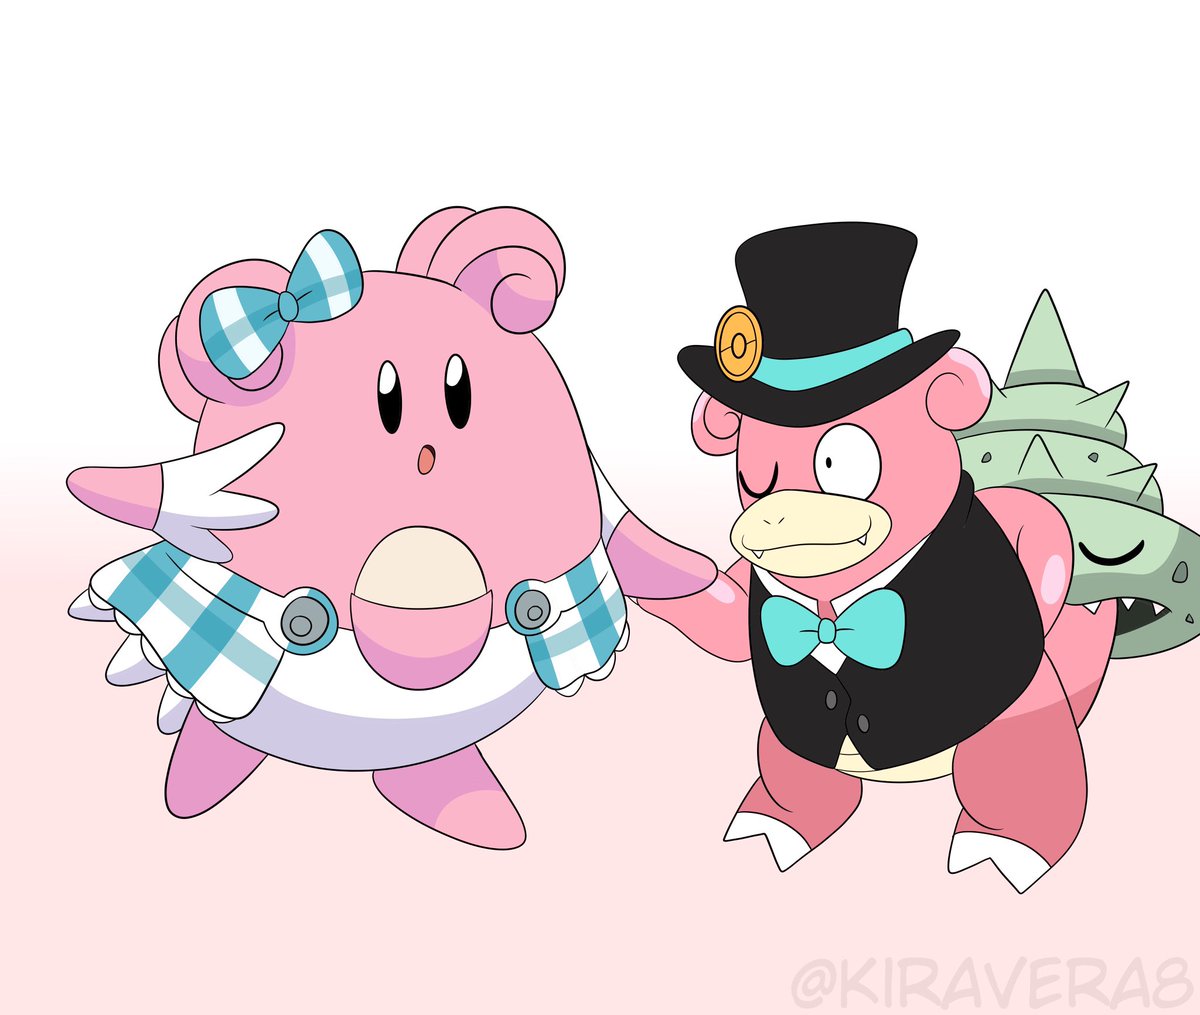 「checkered dresses and tuxedos! #PokemonU」|Kira (◕ᴥ◕)✨@Paldea💕のイラスト